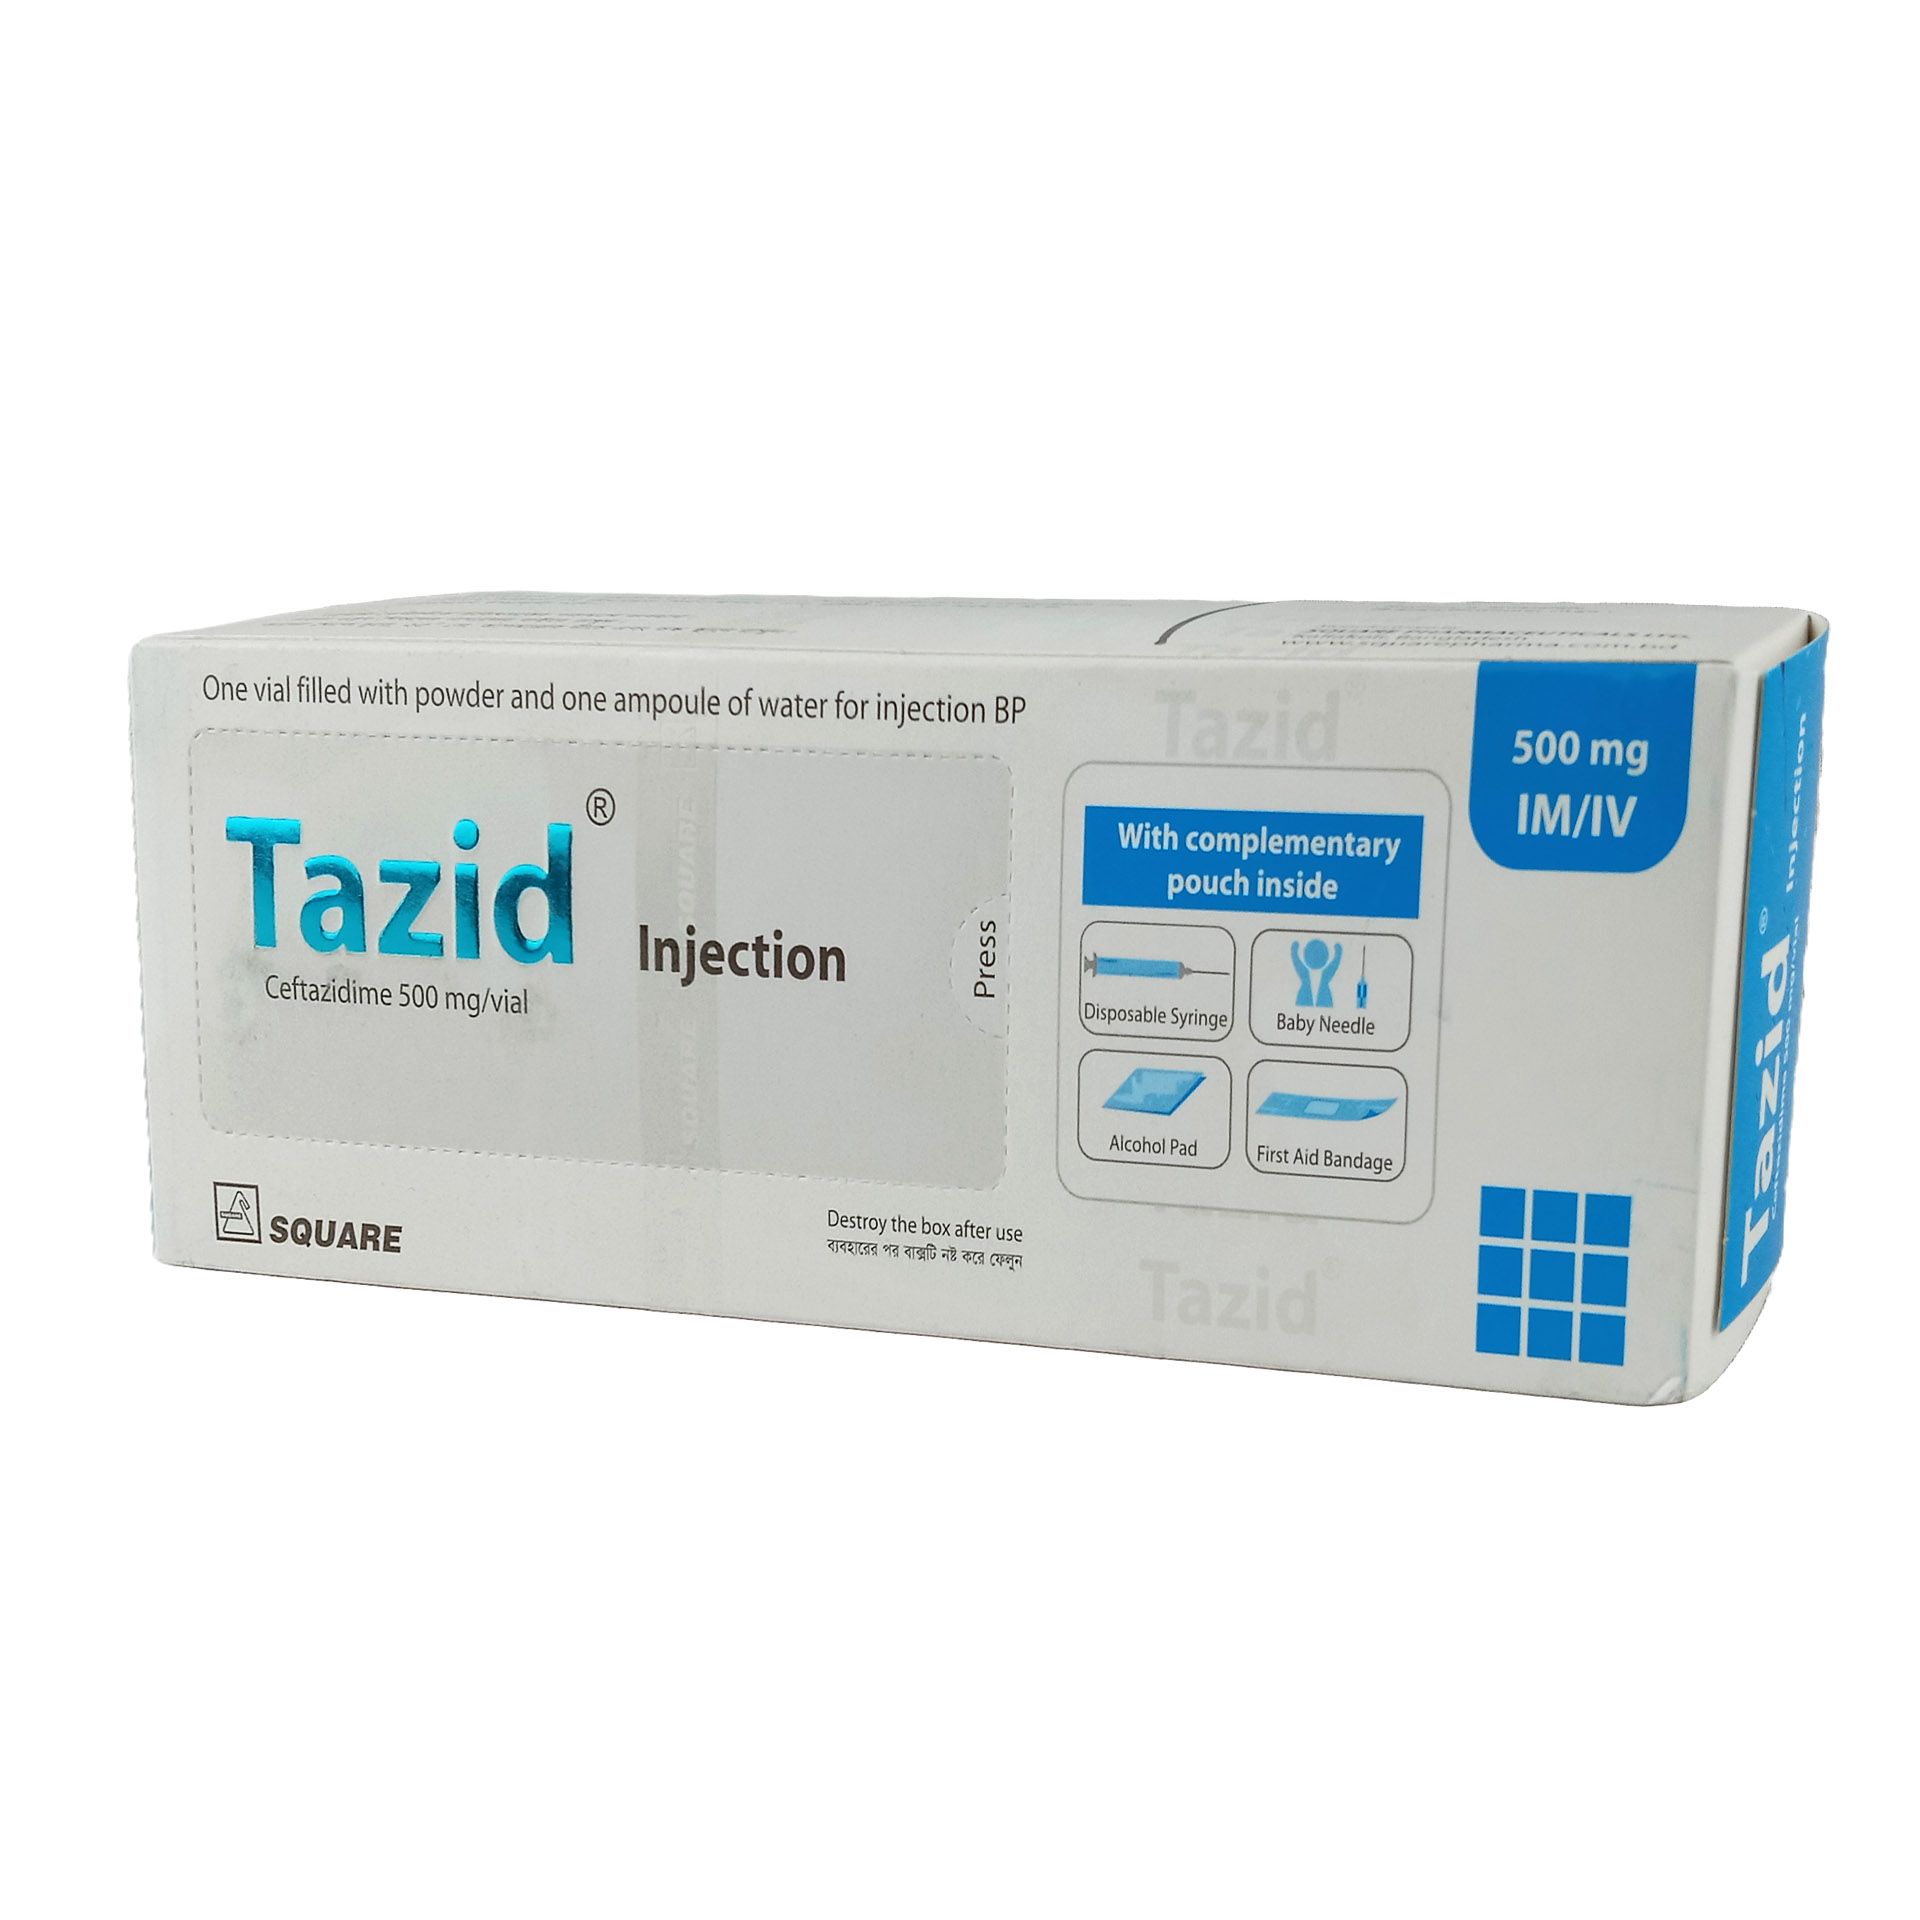 Tazid IV/IM 500mg/vial Injection